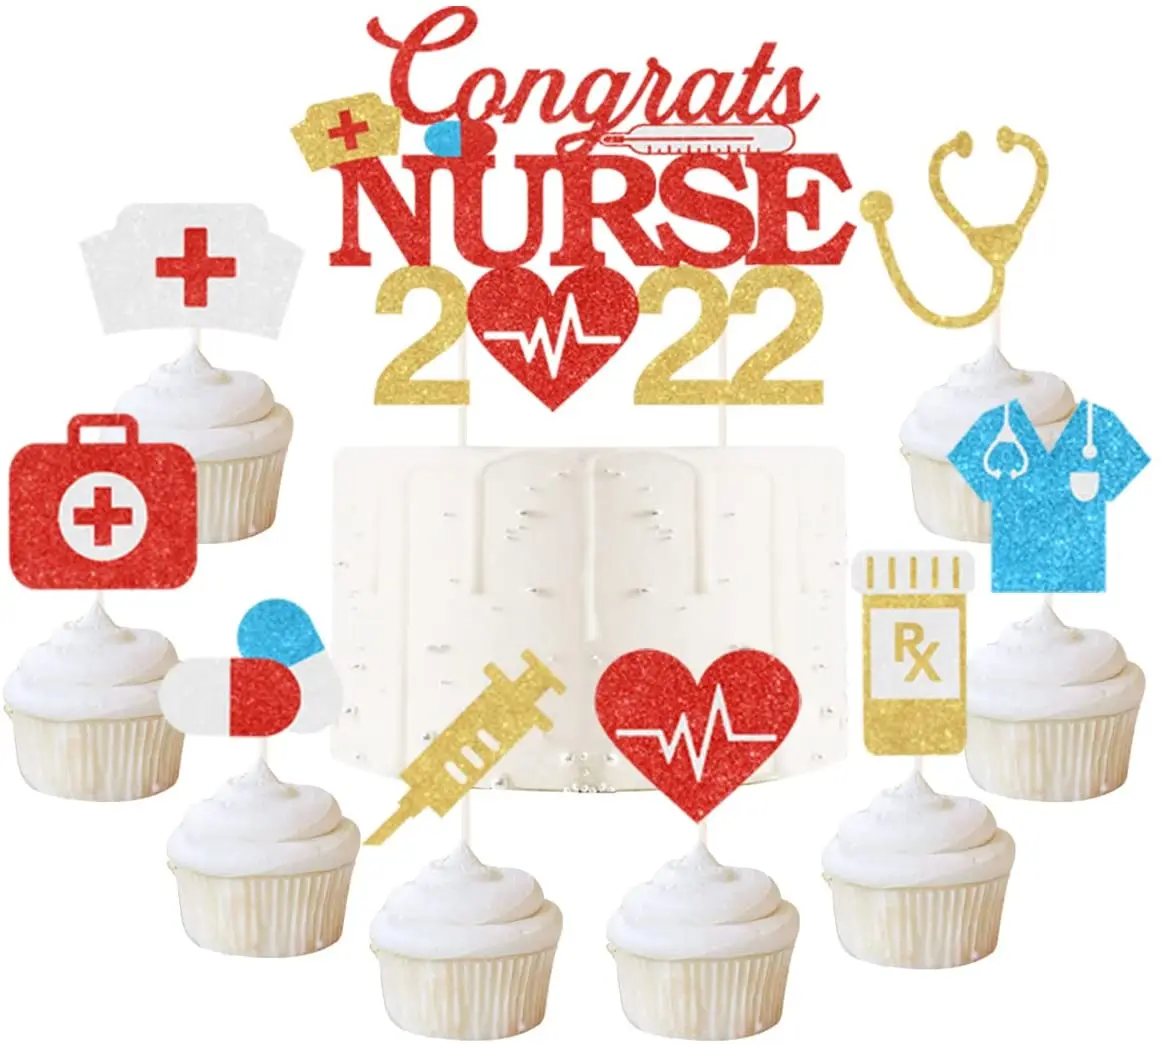 JOLLYBOOM Congrats Nurse 2022 Cake Topper 2022 Graduation Decorations for Nursing Medical School RN Graduation Party Supplies